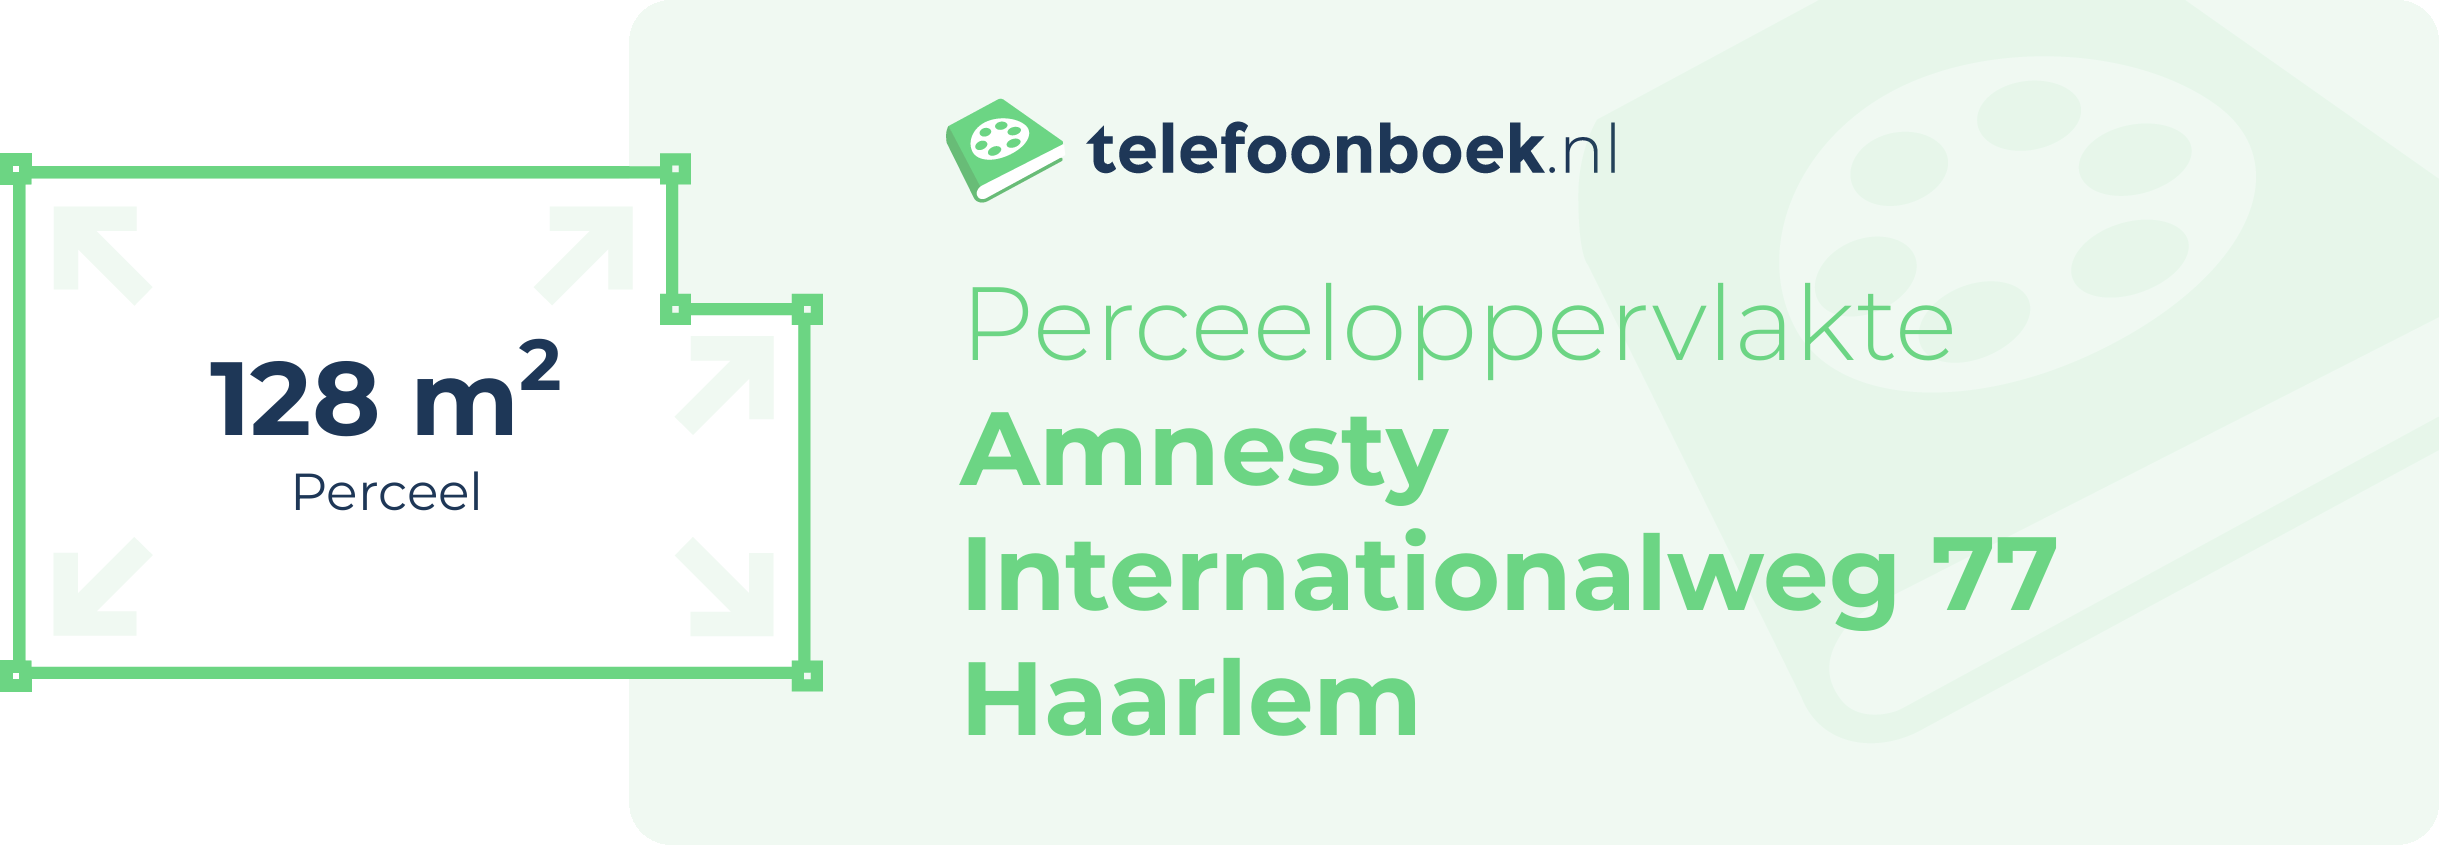 Perceeloppervlakte Amnesty Internationalweg 77 Haarlem